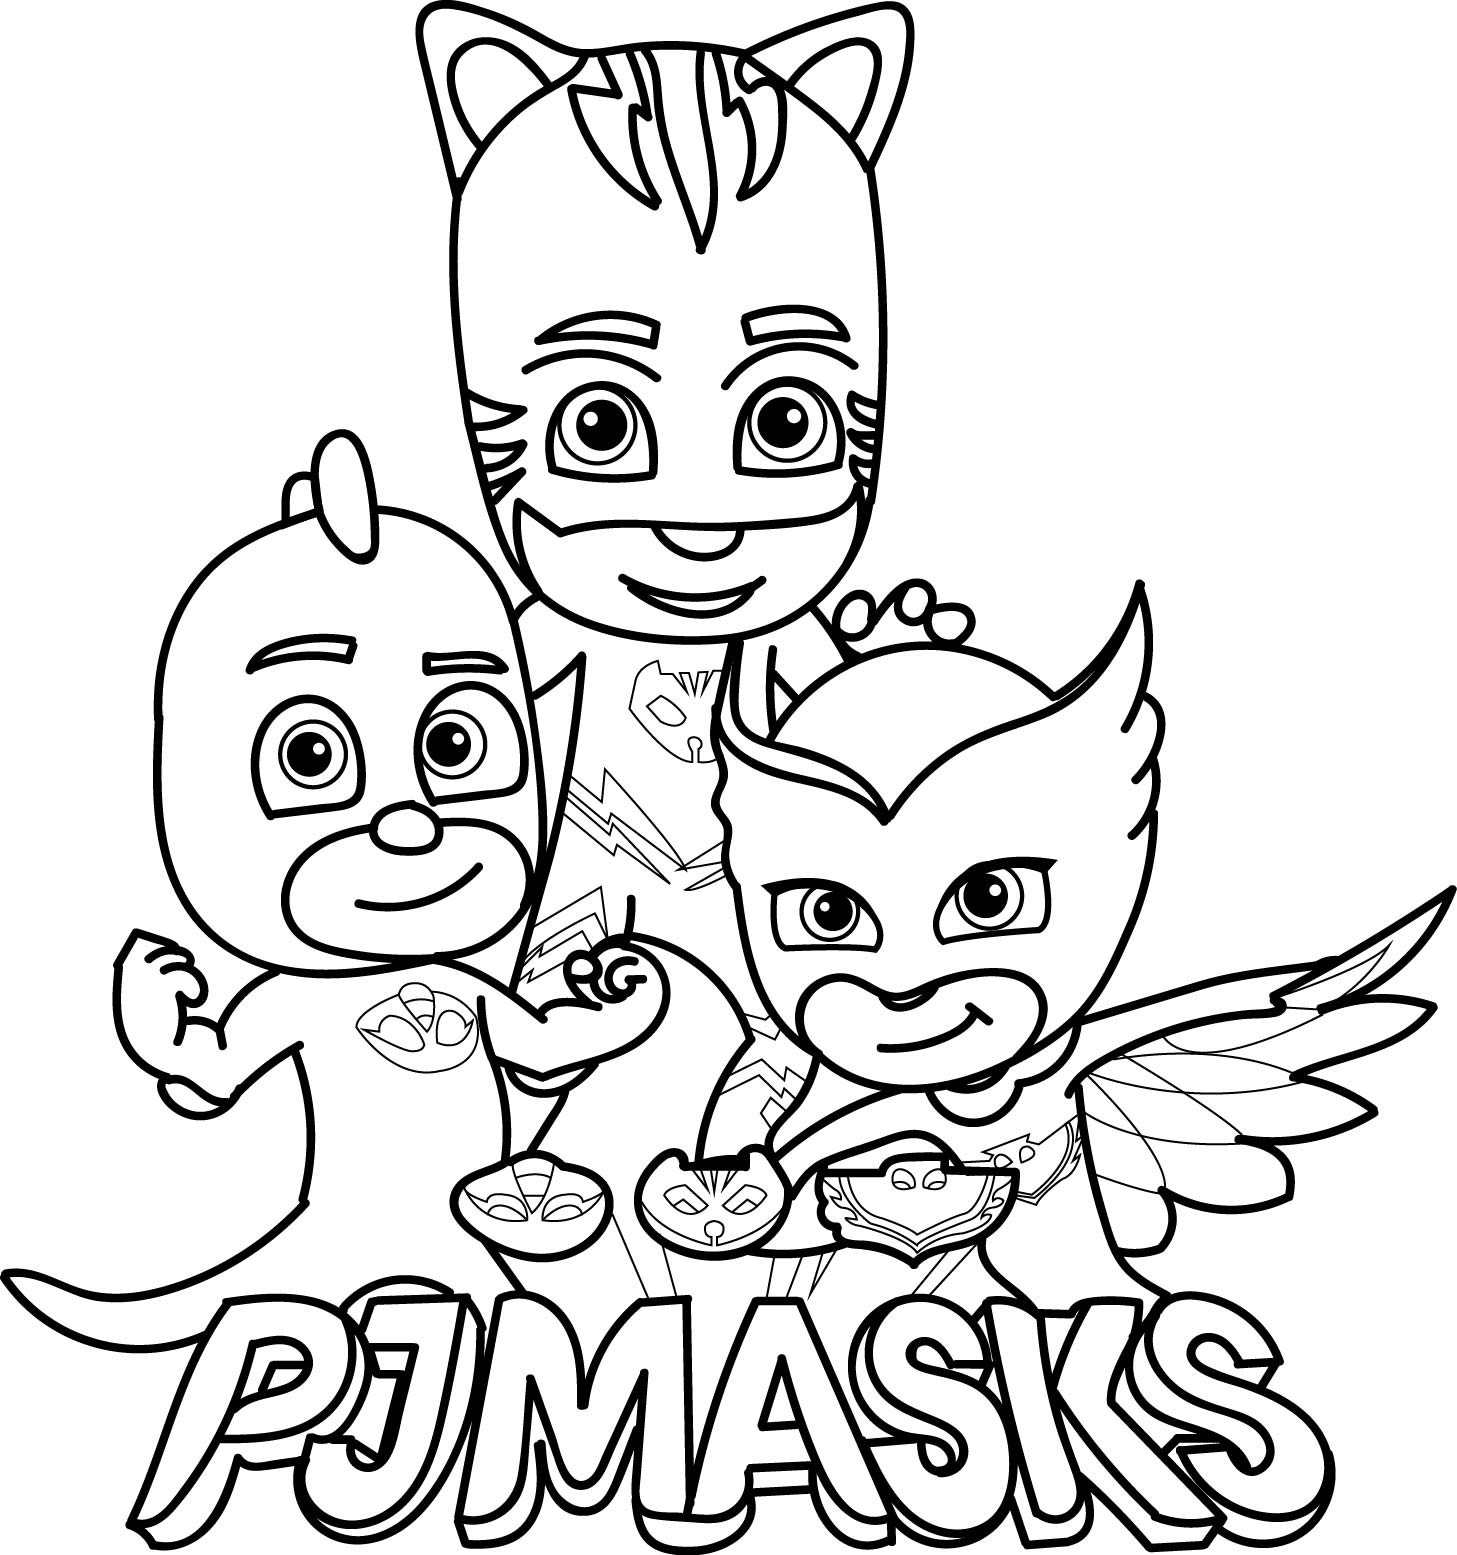 Pj Masks Coloring Pages To Print
 PJ Masks Coloring Pages Best Coloring Pages For Kids